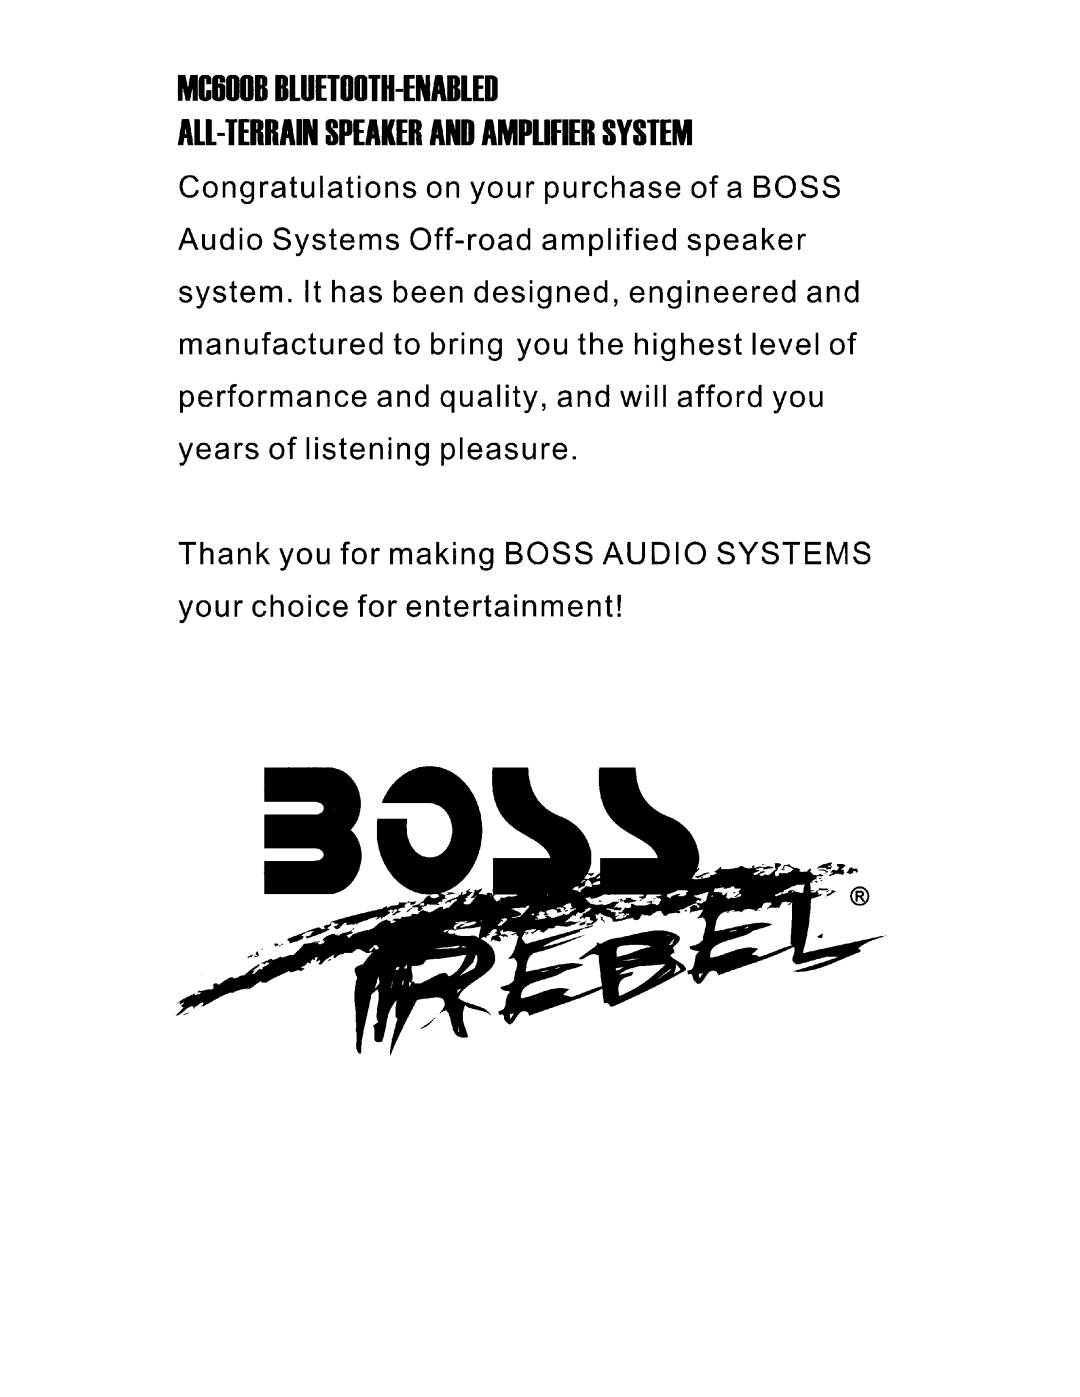 Boss Audio Systems MC600B user manual Mc&Oob Bluetddth-Enabled, All-Terrainspeaker And Amplifier System 